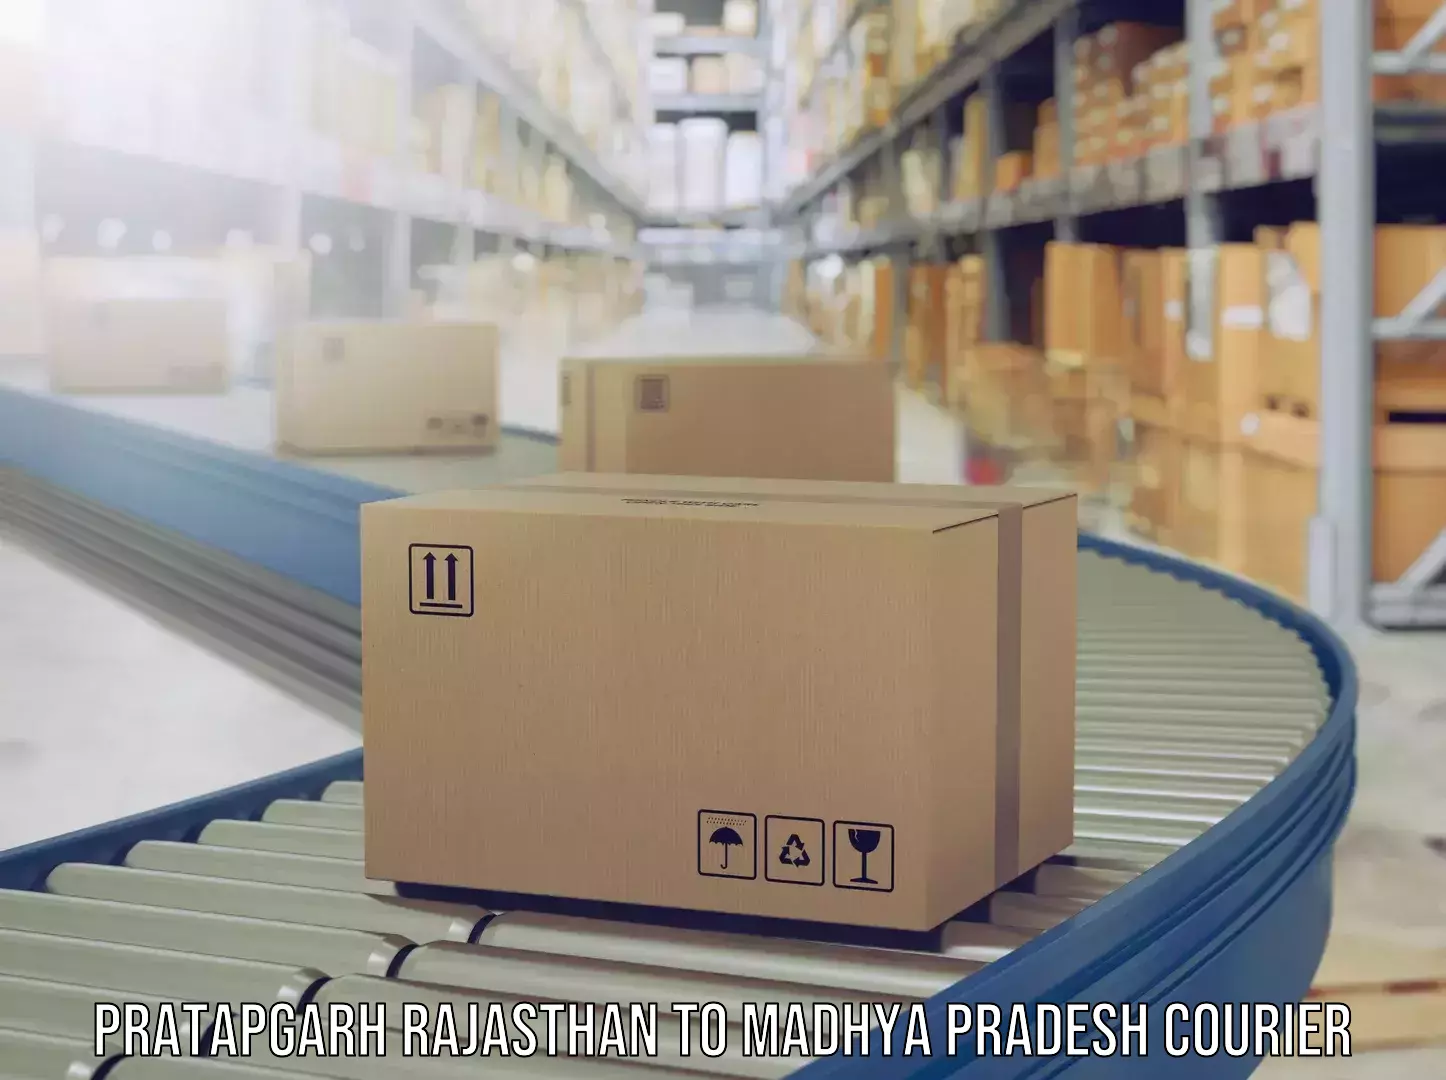 Luggage delivery app Pratapgarh Rajasthan to Vijayraghavgarh